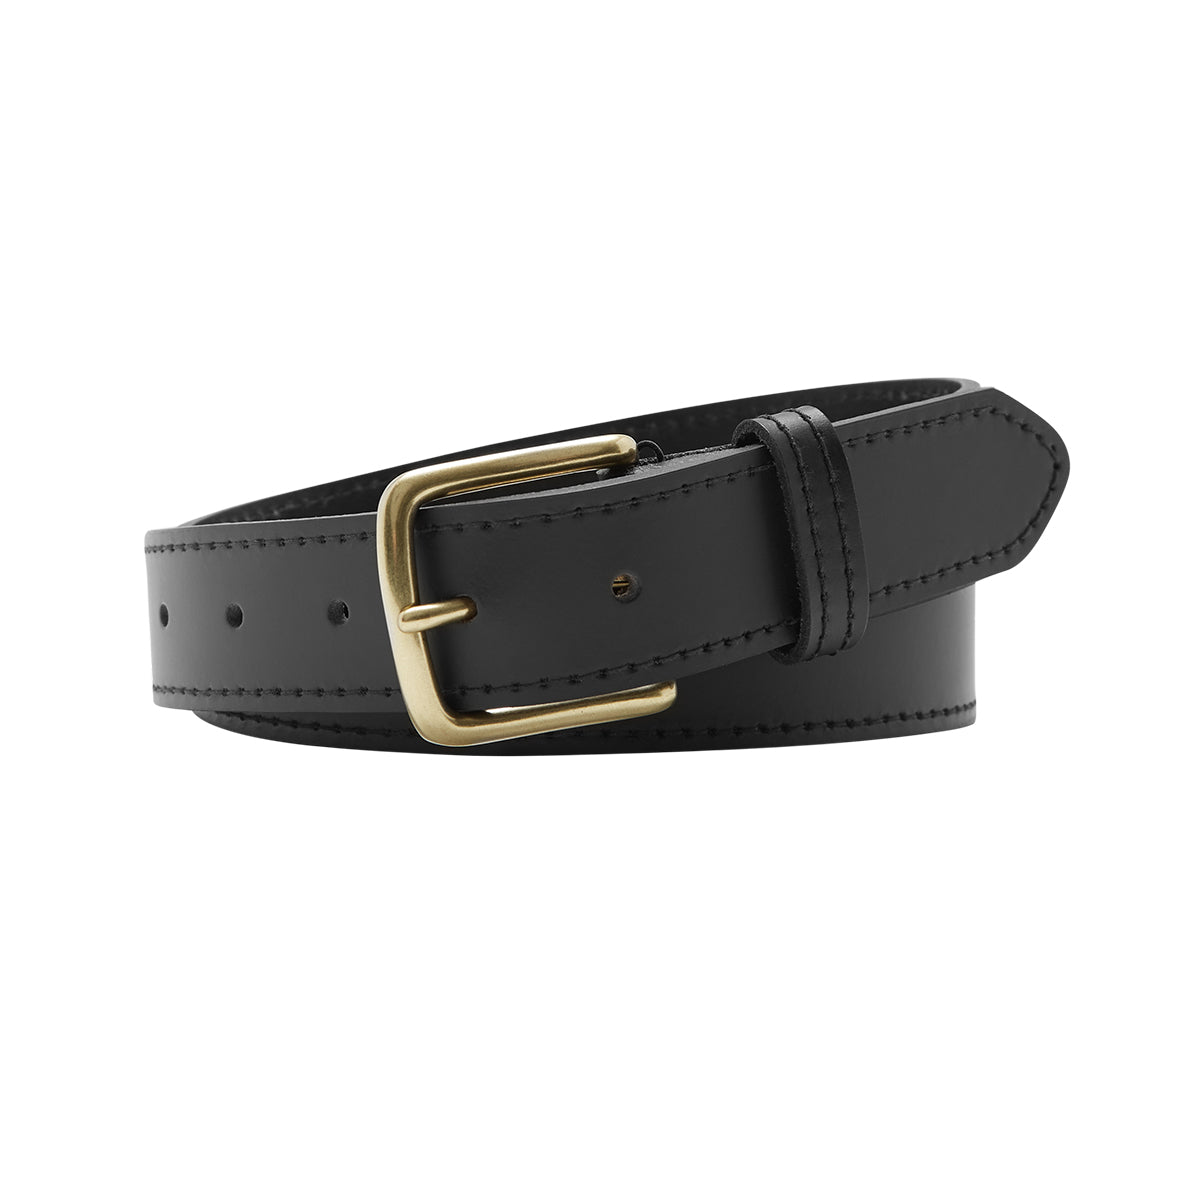 WYOMING Black. Men’s Buffalo Leather Belt. 35mm width.-Buffalo Leather Belts-PEROZ Accessories